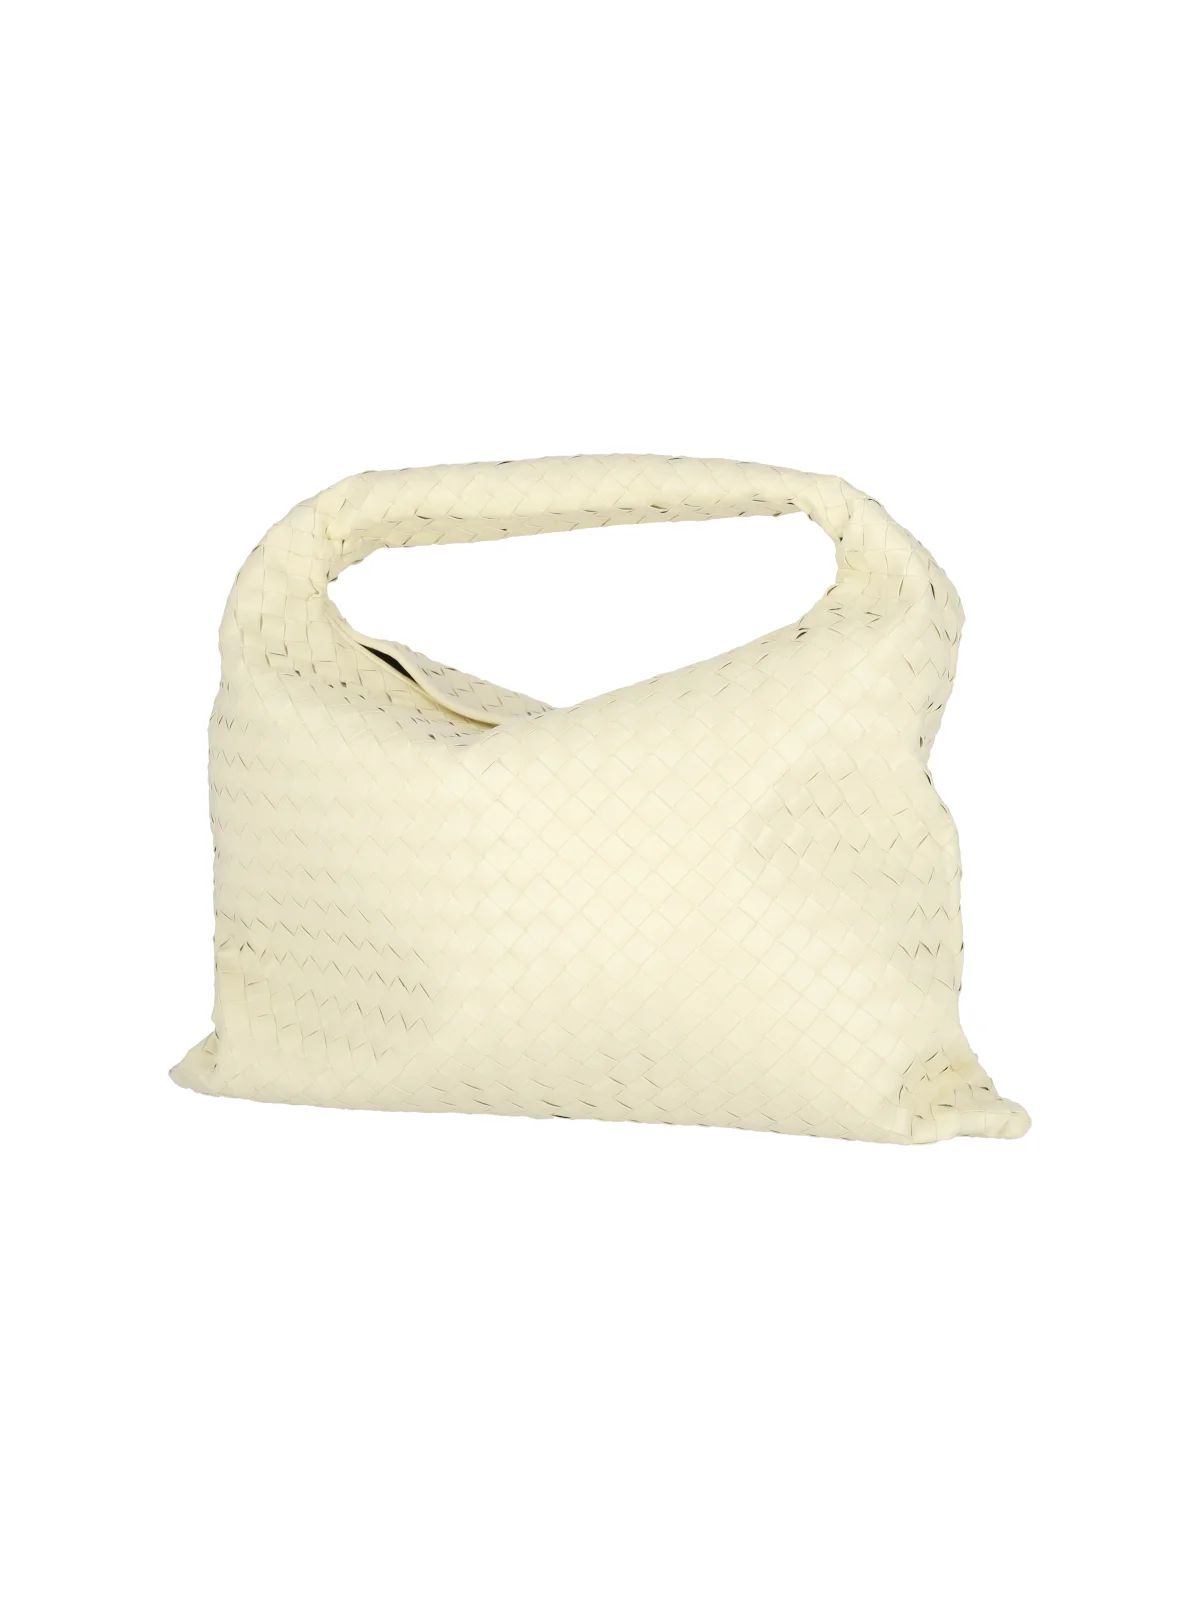 Bottega Veneta Large Hop Shoulder Bag | Cettire Global